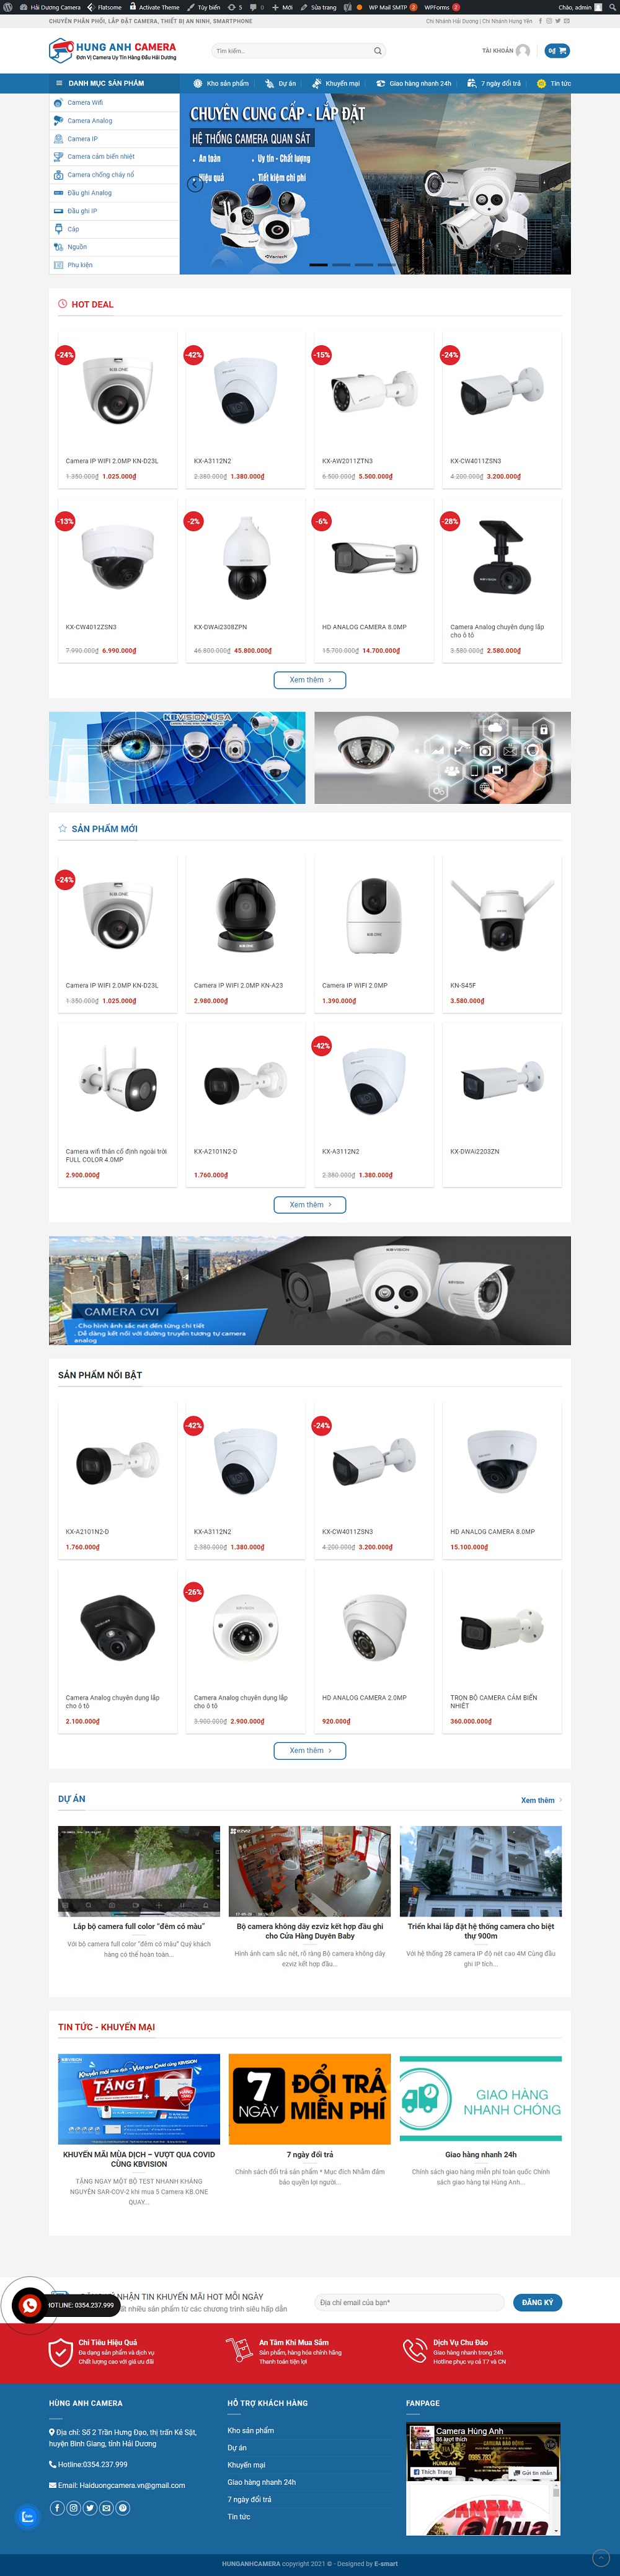 Thiết kế website camera giám sát